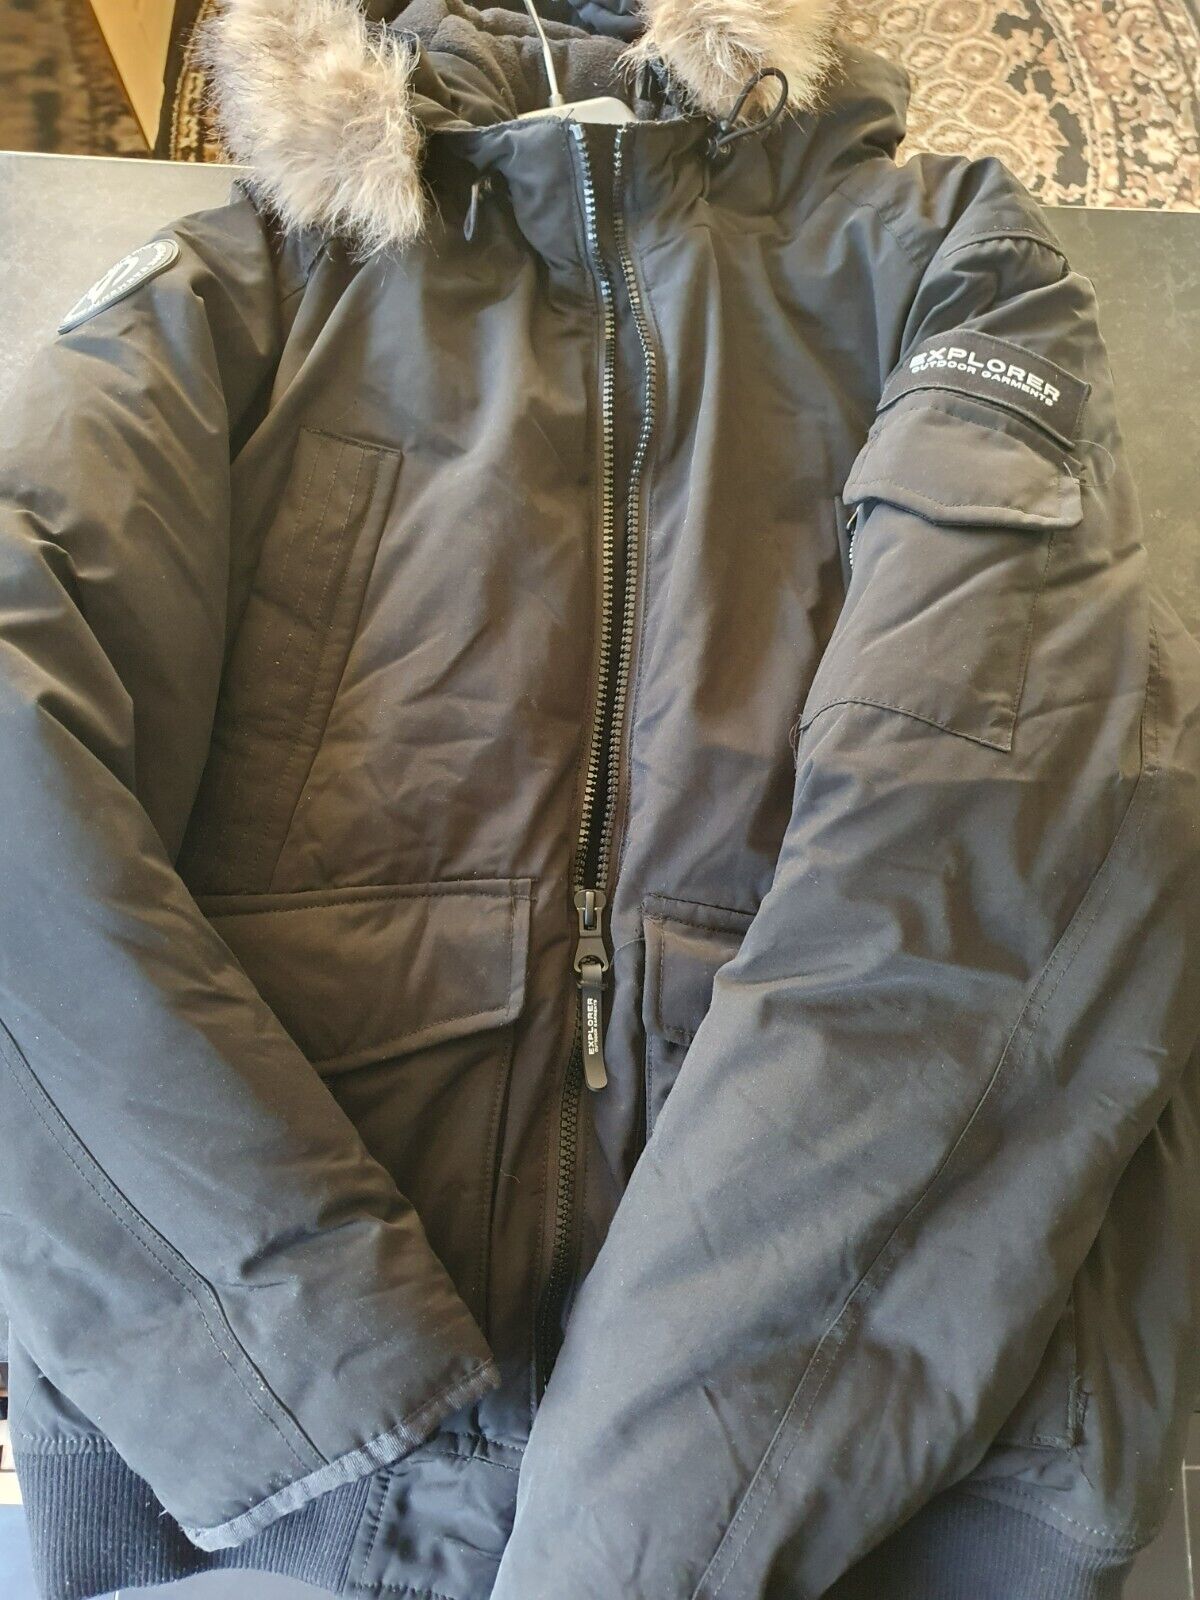 SMOG Explorer Outdoor Garments Jacket - Size XL